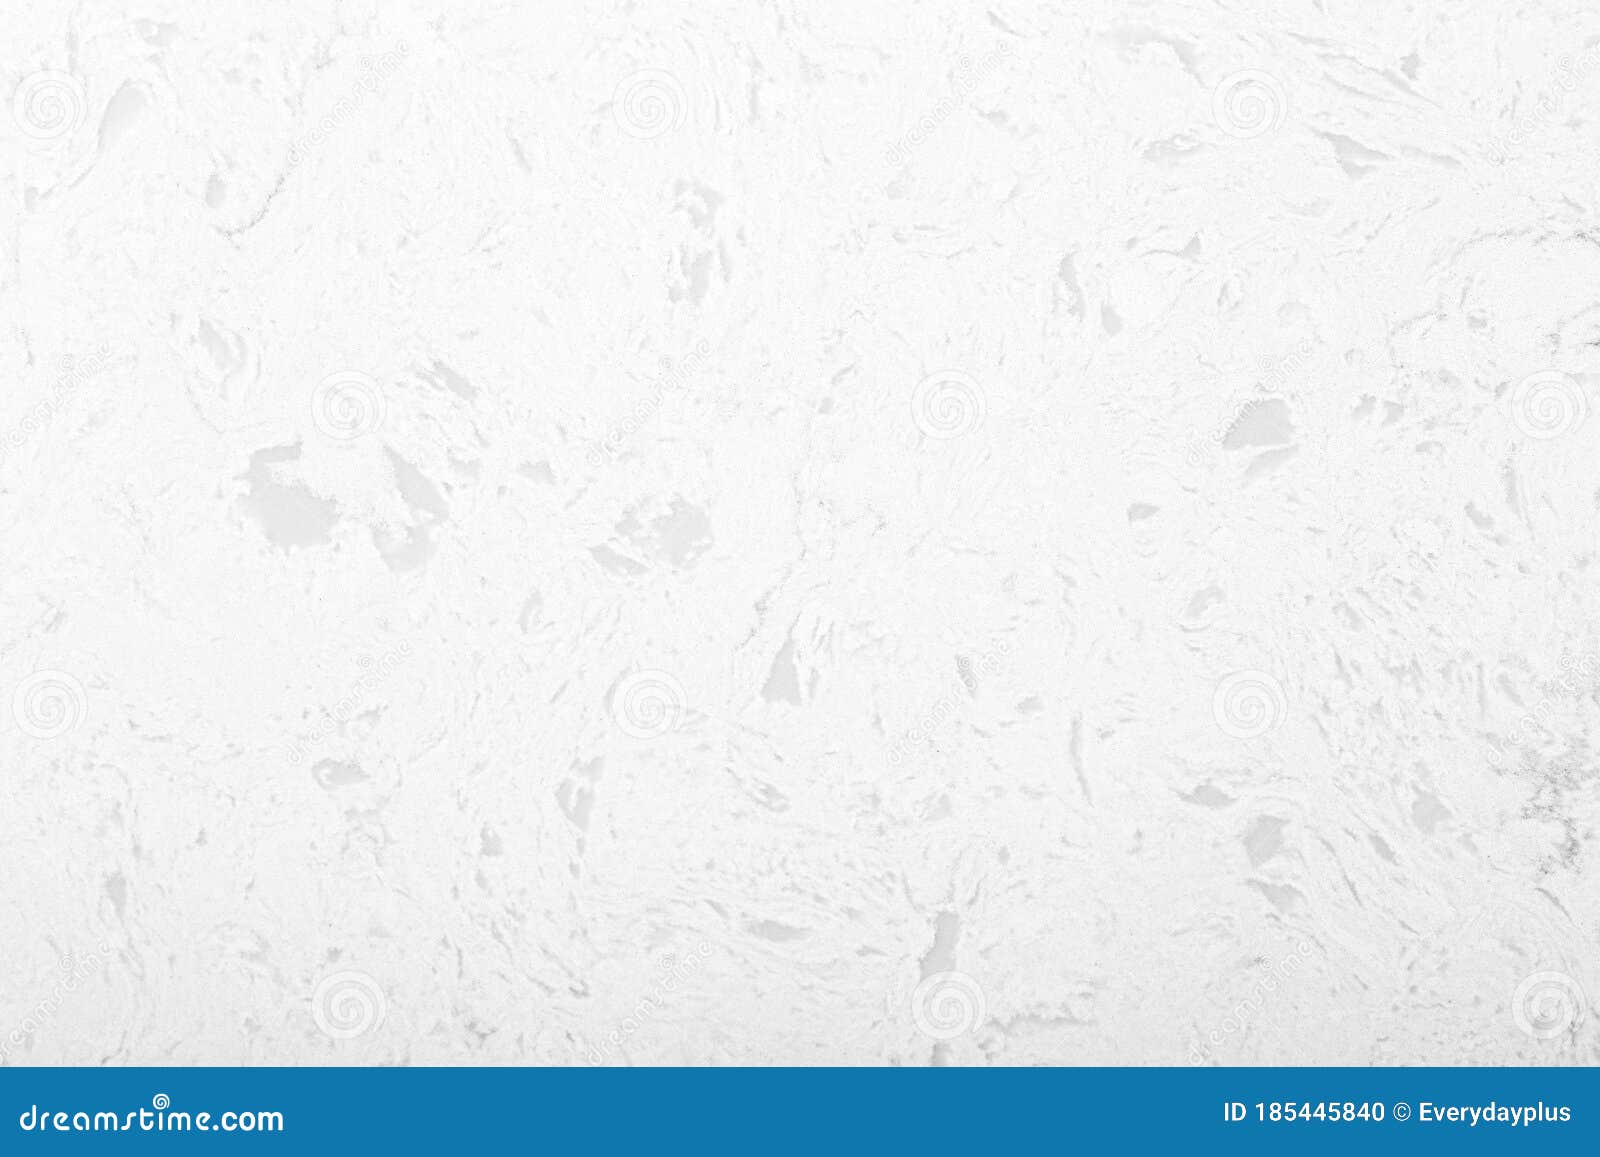 White Quartz Close Up Texture Stock Photo - Image of kitchen, natural ...